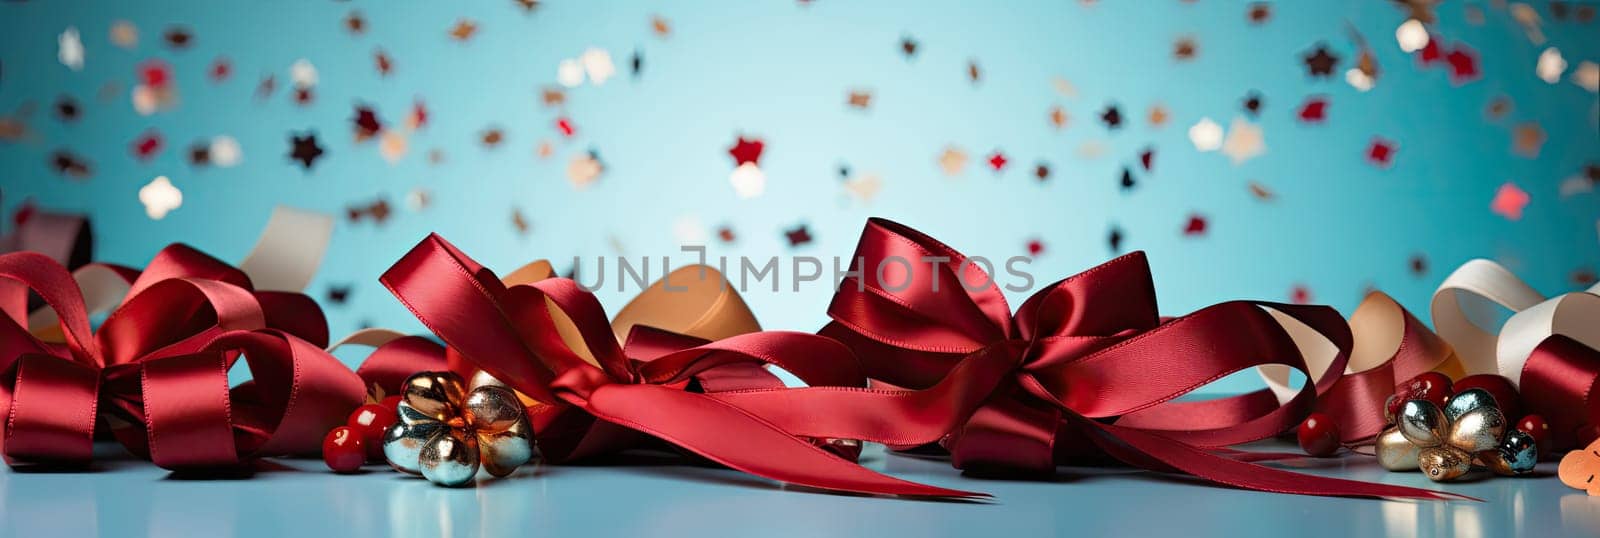 A bright red ribbon on a pale blue background, symbolizing a holiday, festive mood, joy and celebration.